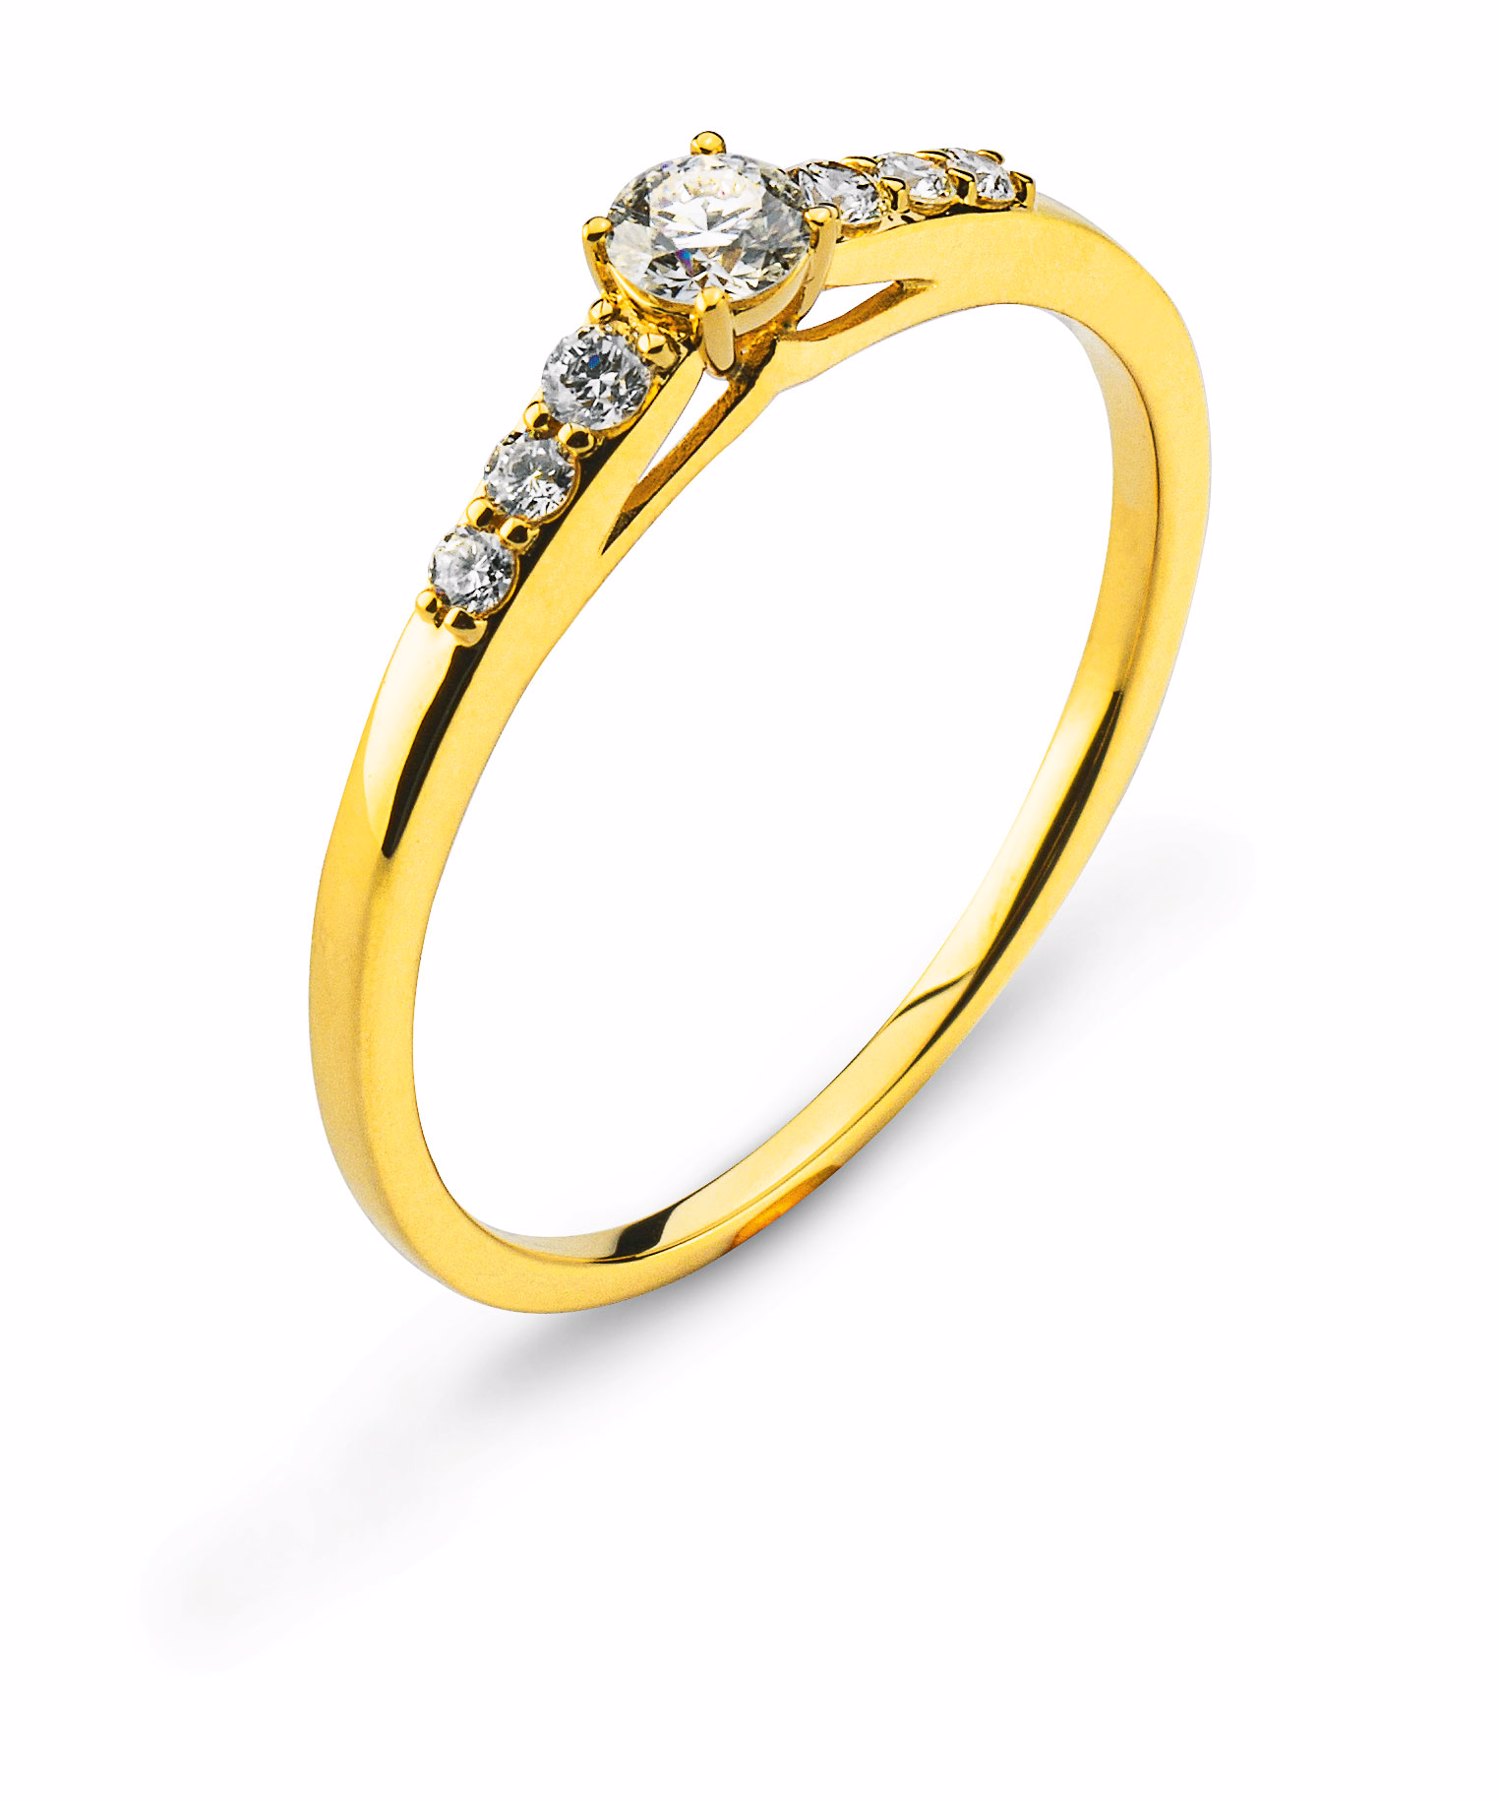 AURONOS Prestige Yellow gold 18K diamonds 0.24ct